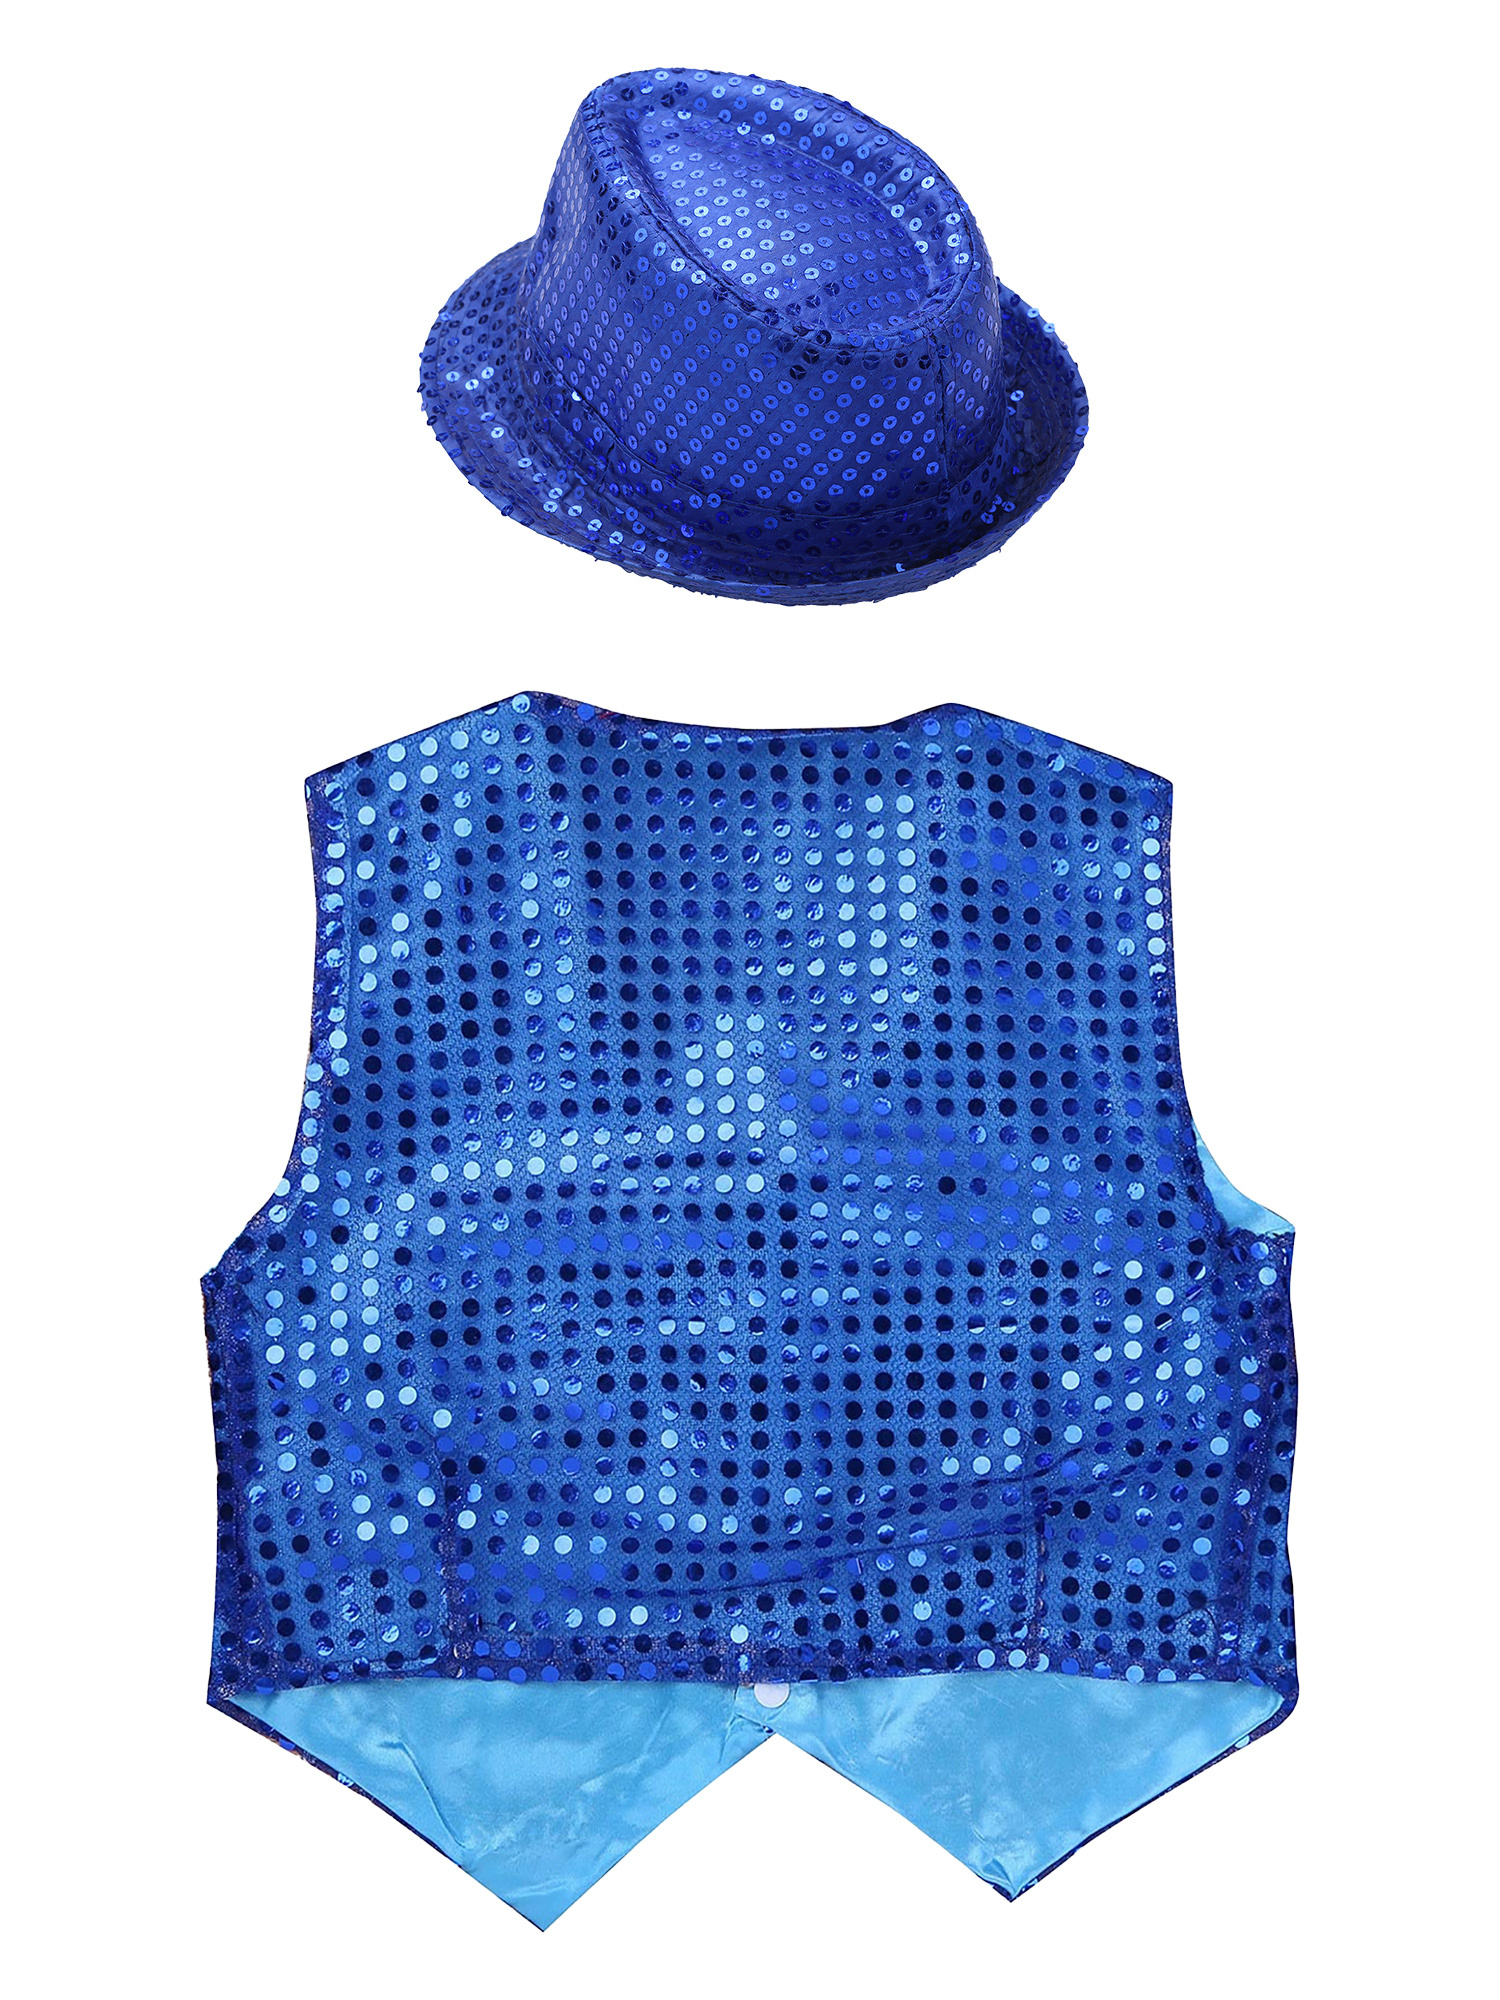 IEFIEL Kids Boys Sparkle Sequins Button Down Vest with Hat Dance Outfit Set Hip Hop Jazz Stage Performance Costume Blue 7-8 - image 4 of 7